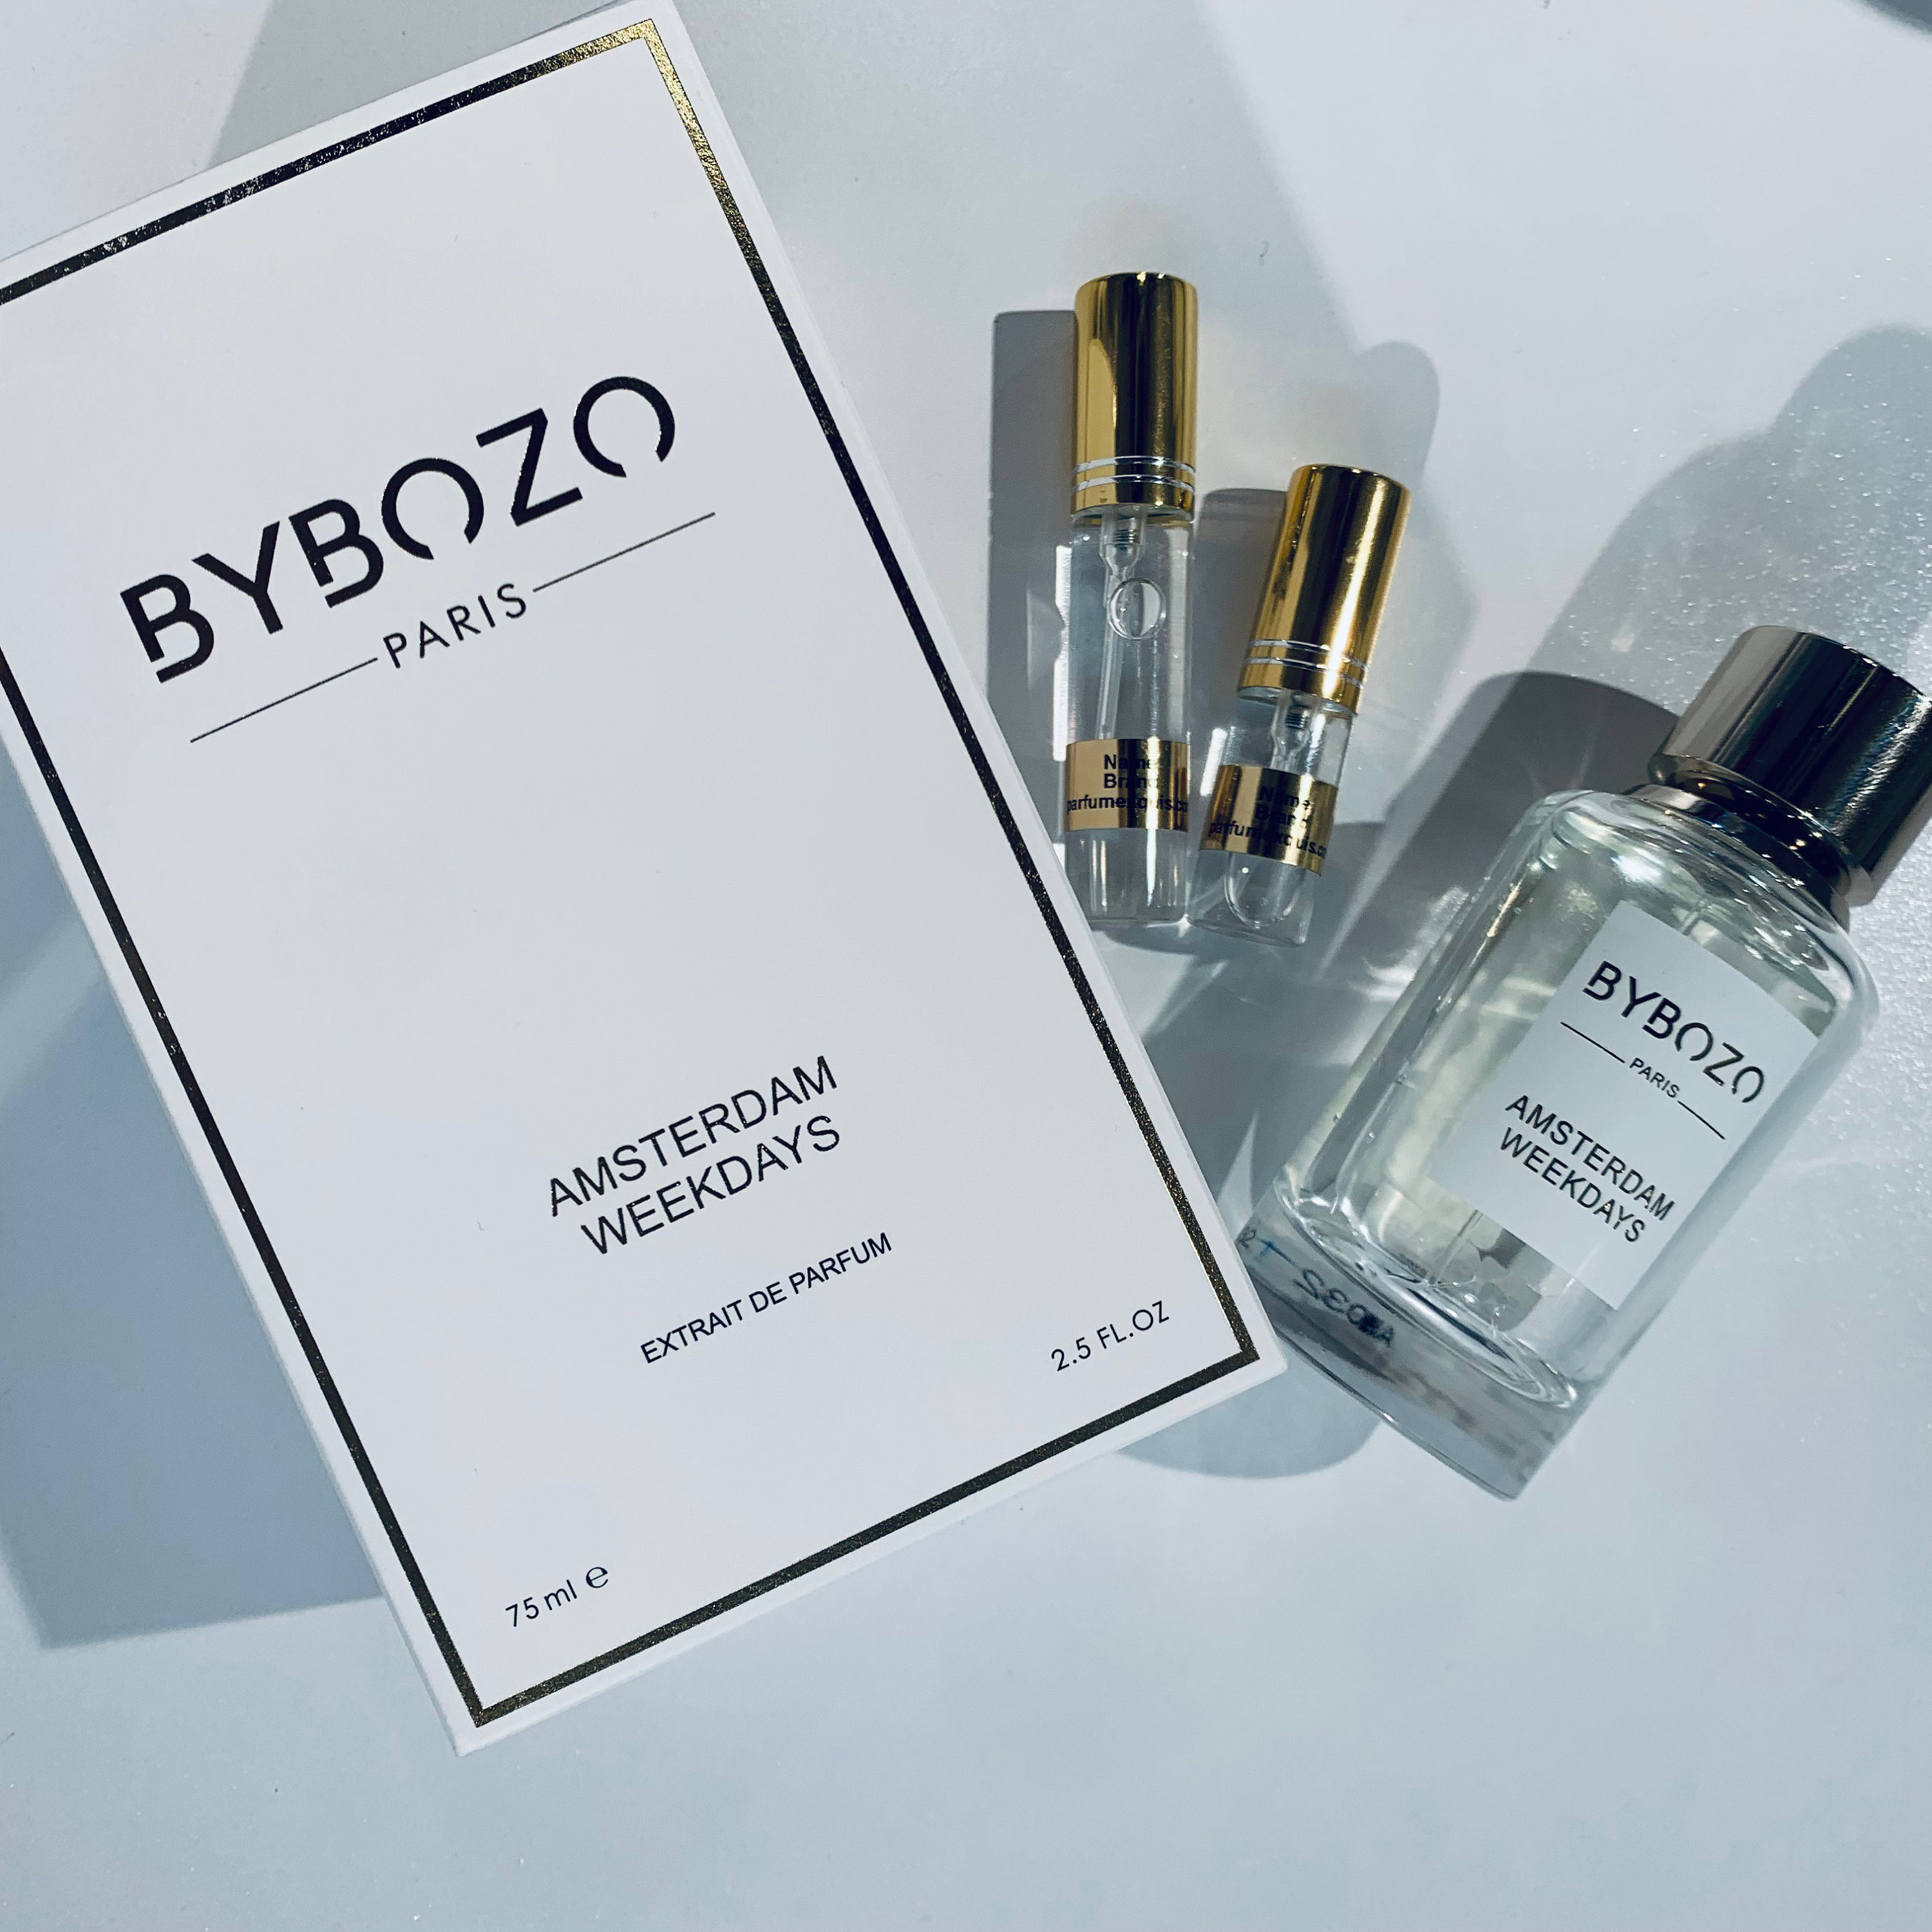 Amsterdam Weekdays Bybozo Extrait Du Parfum Spray Long-lasting -  Israel